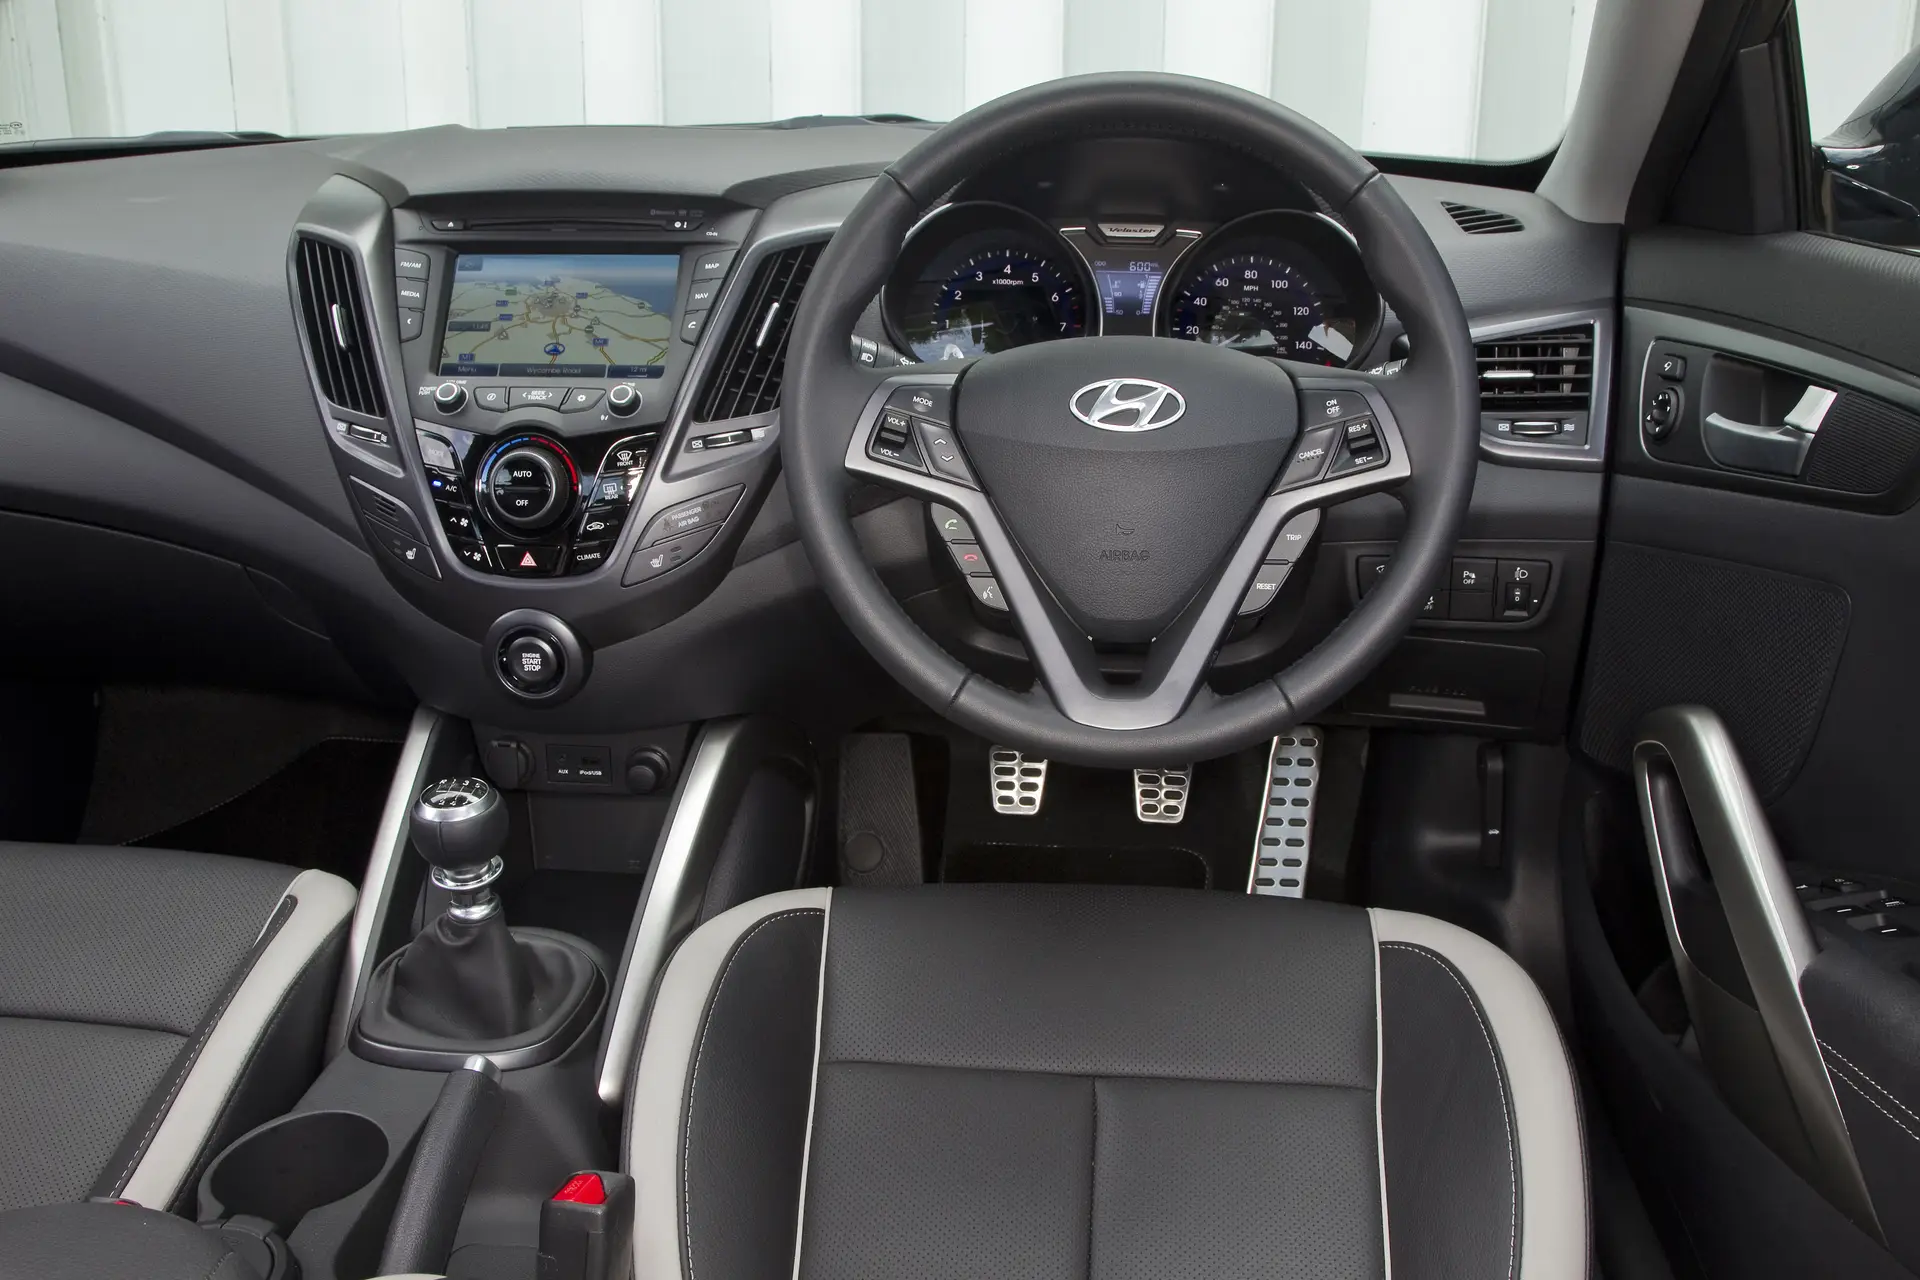 Hyundai Veloster (2013-2015) Review: interior close up photo of the Hyundai Veloster dashboard